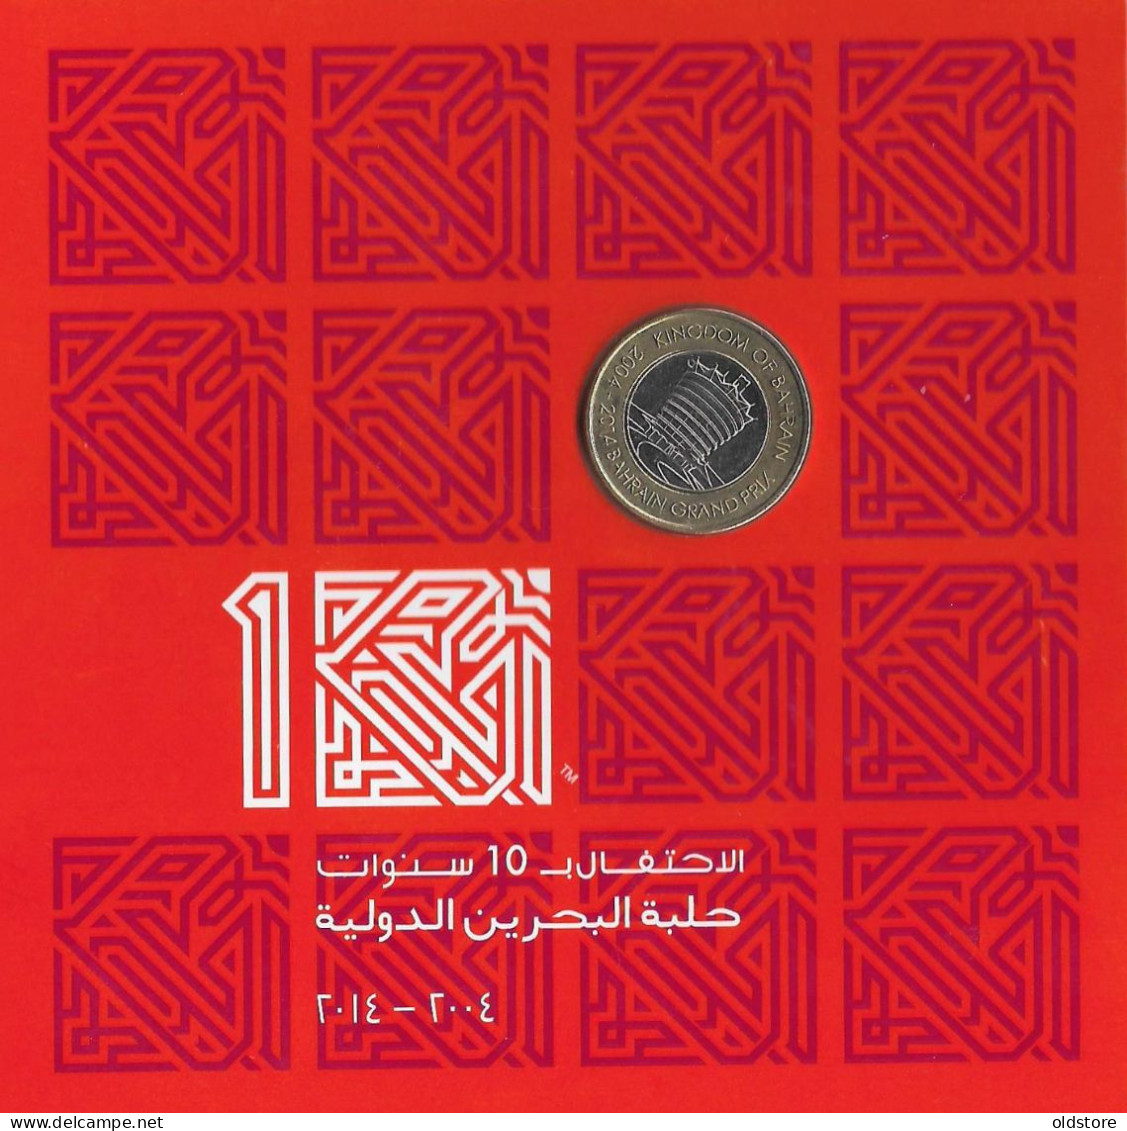 Bahrain Coins - Bahrain Grand Prix Formula 1 - 100 Fils Commemorative Coin - 2 Coins Set - ND 2004 And 2014 - Bahrain